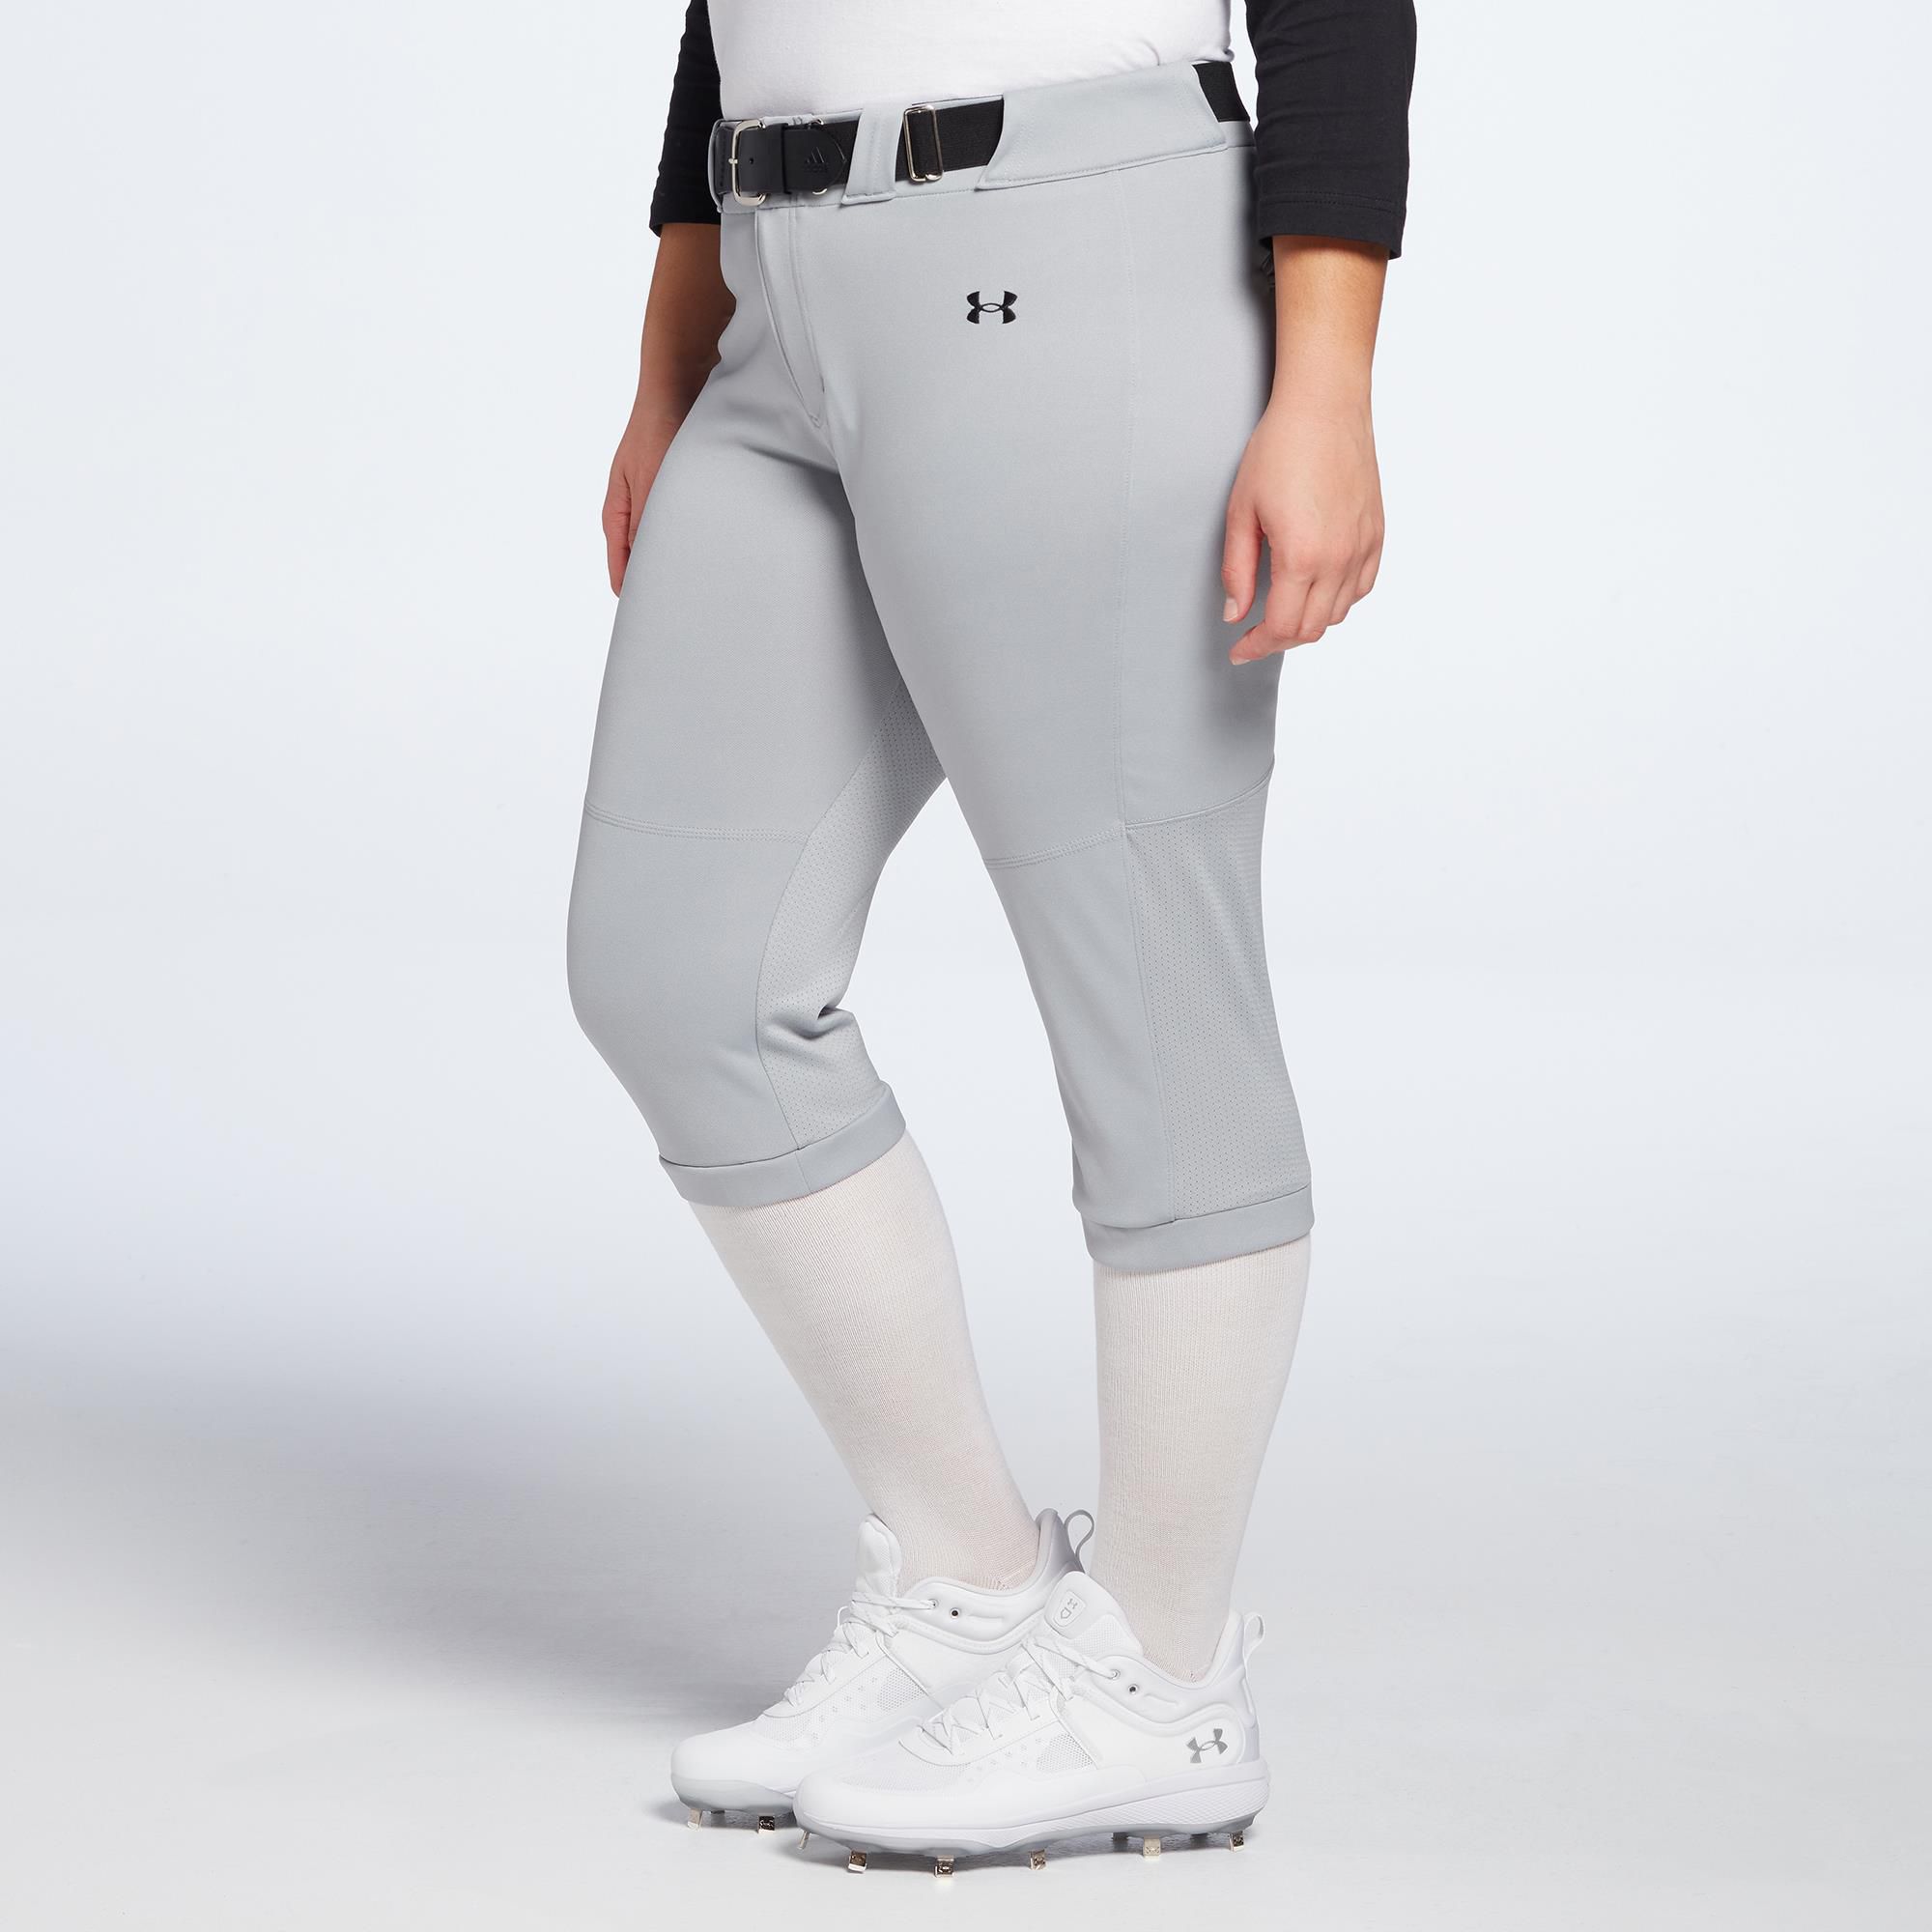 Under Armour Women's Vanish Softball Pants